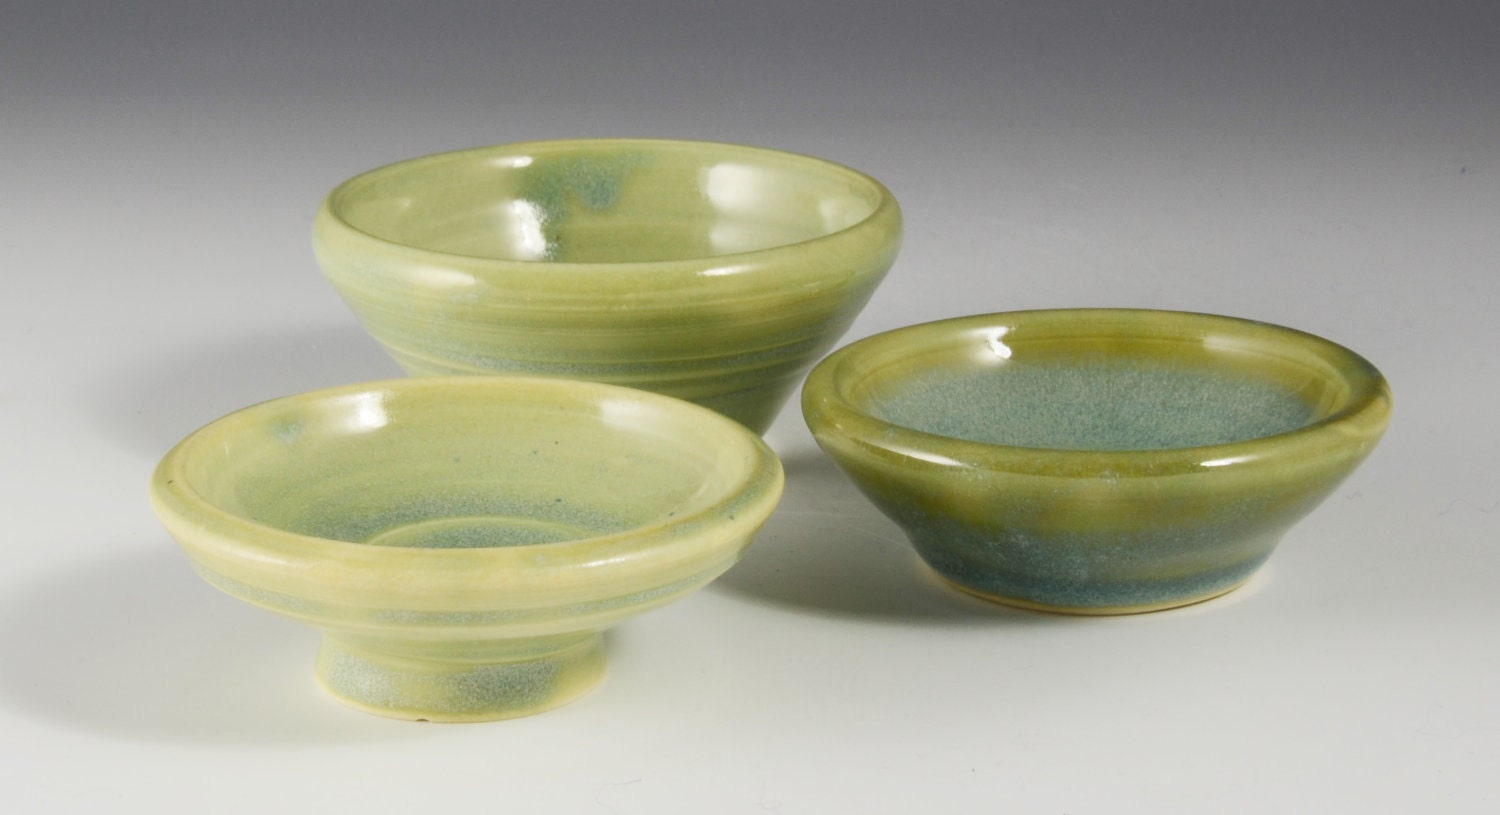 Porcelain mini bowls - Xaviers warm jade green glaze